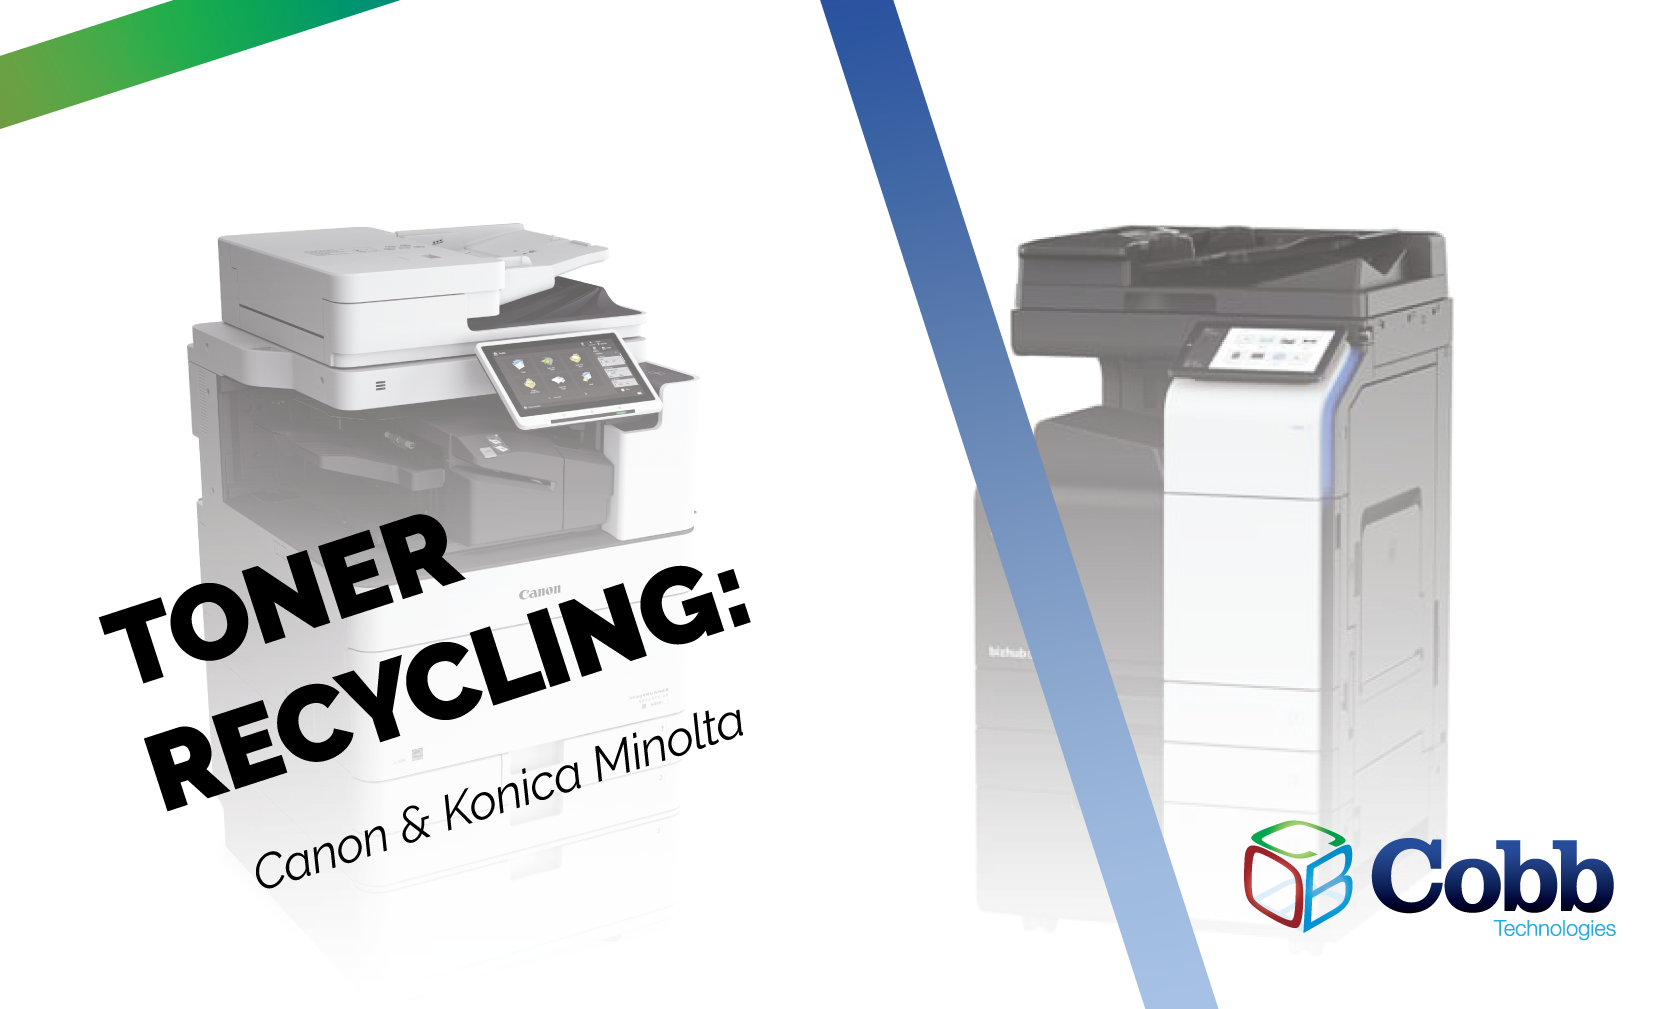 Canon and Konica Minolta Toner Recycling Programs